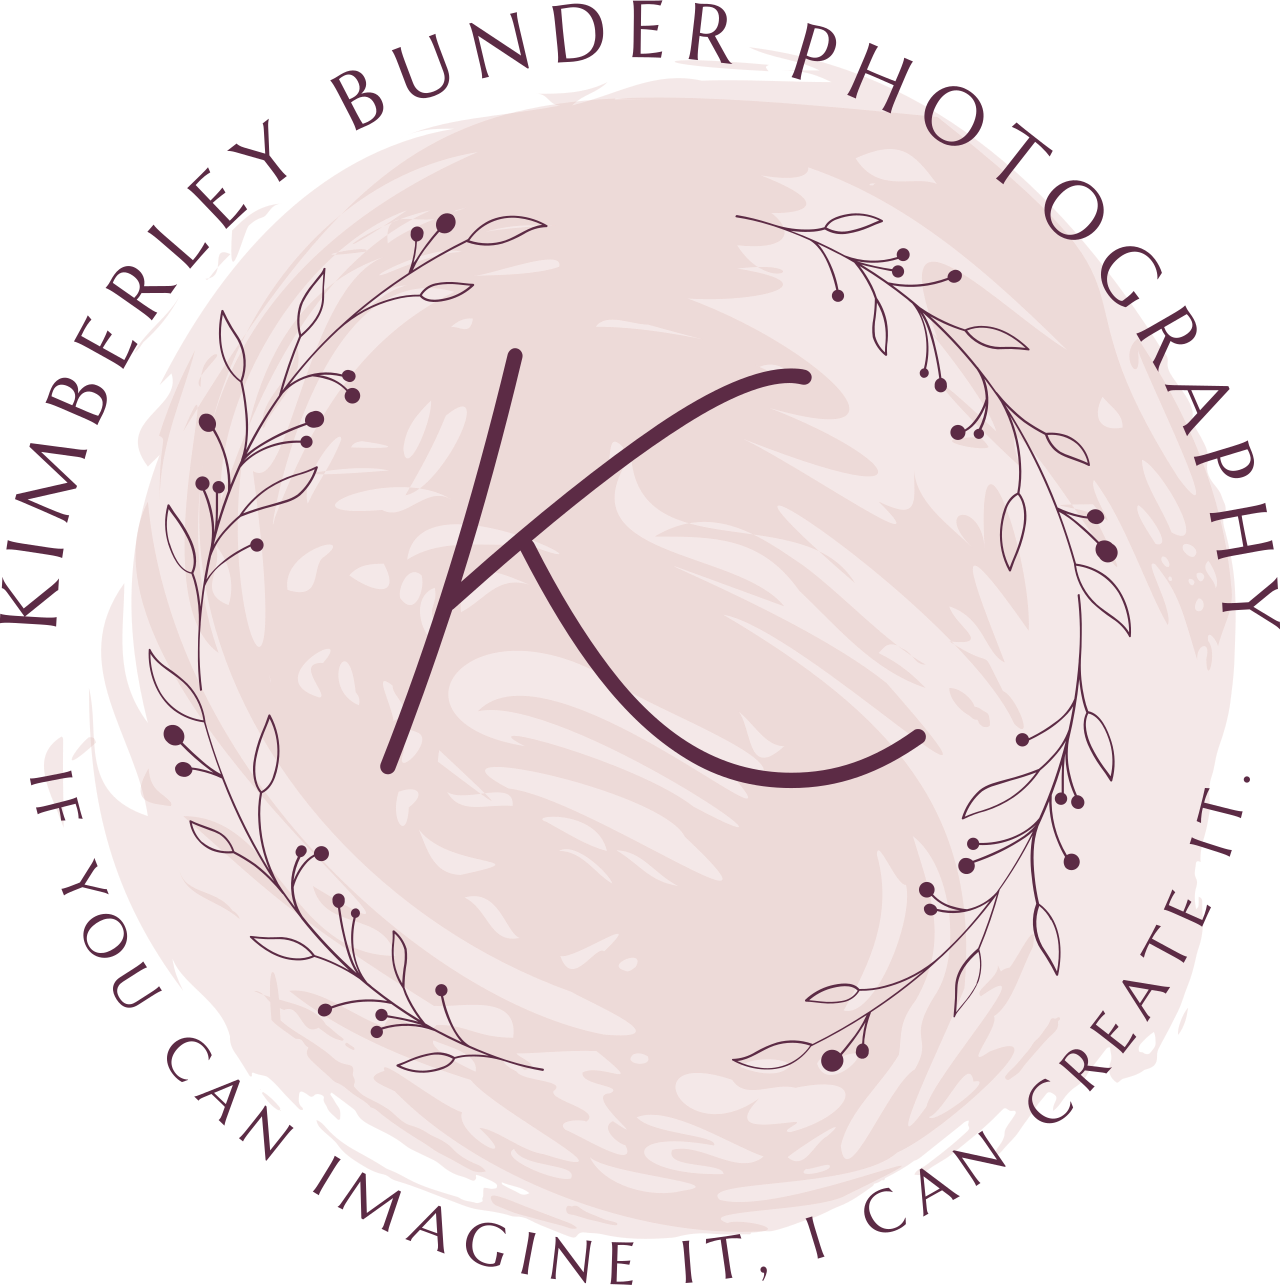 KIMBERLEY BUNDER PHOTOGRAPHY's logo